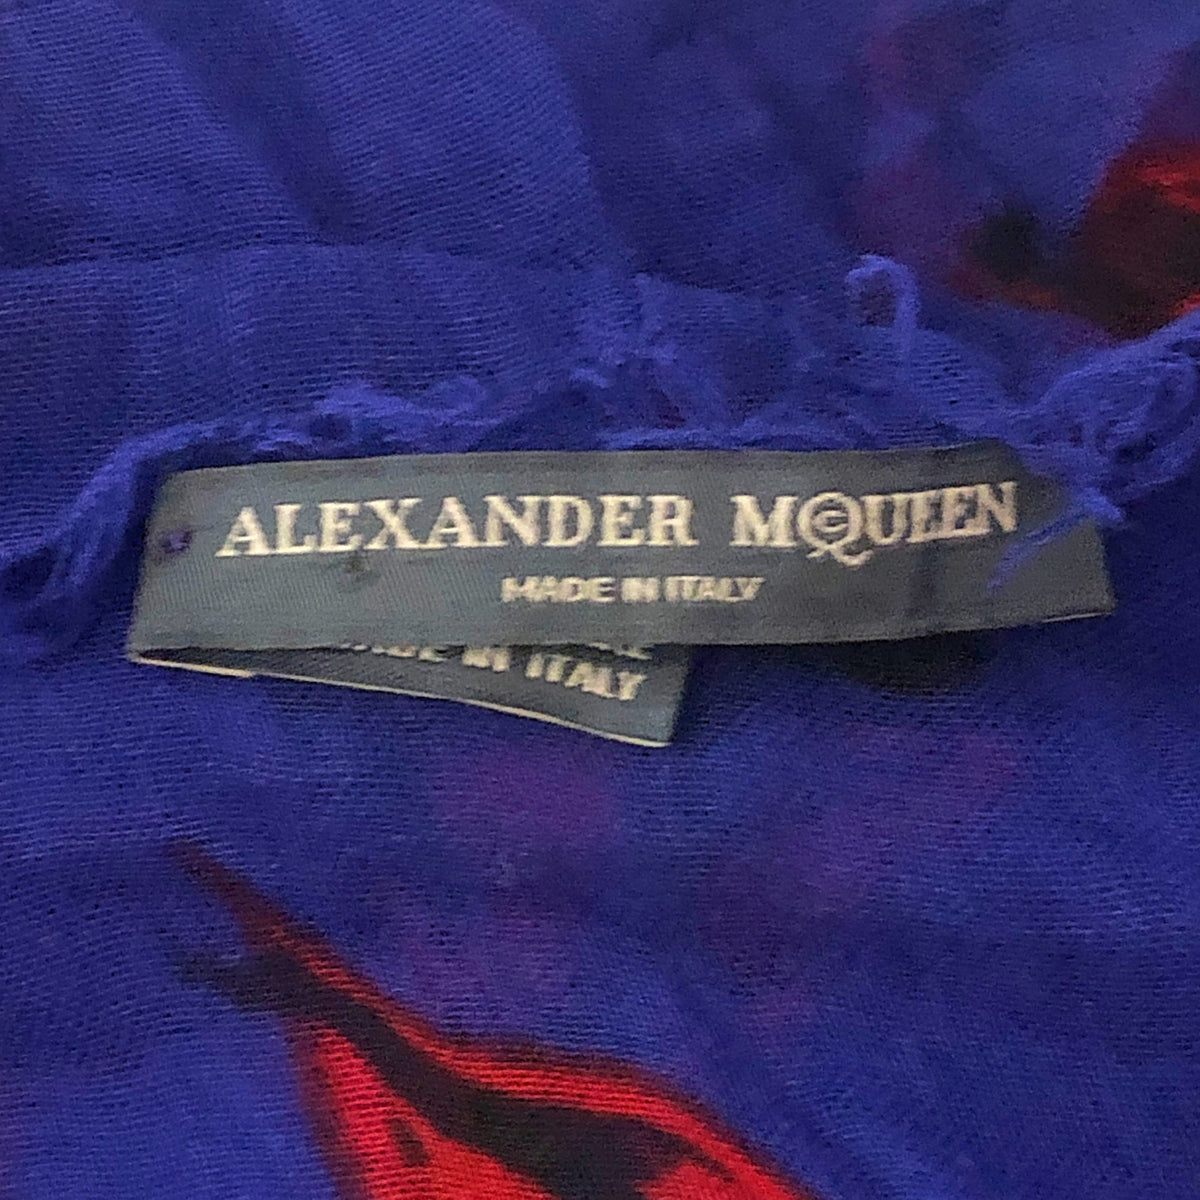 Fular Louis Vuitton  Alexander mcqueen, Alexander mcqueen scarf, Fashion